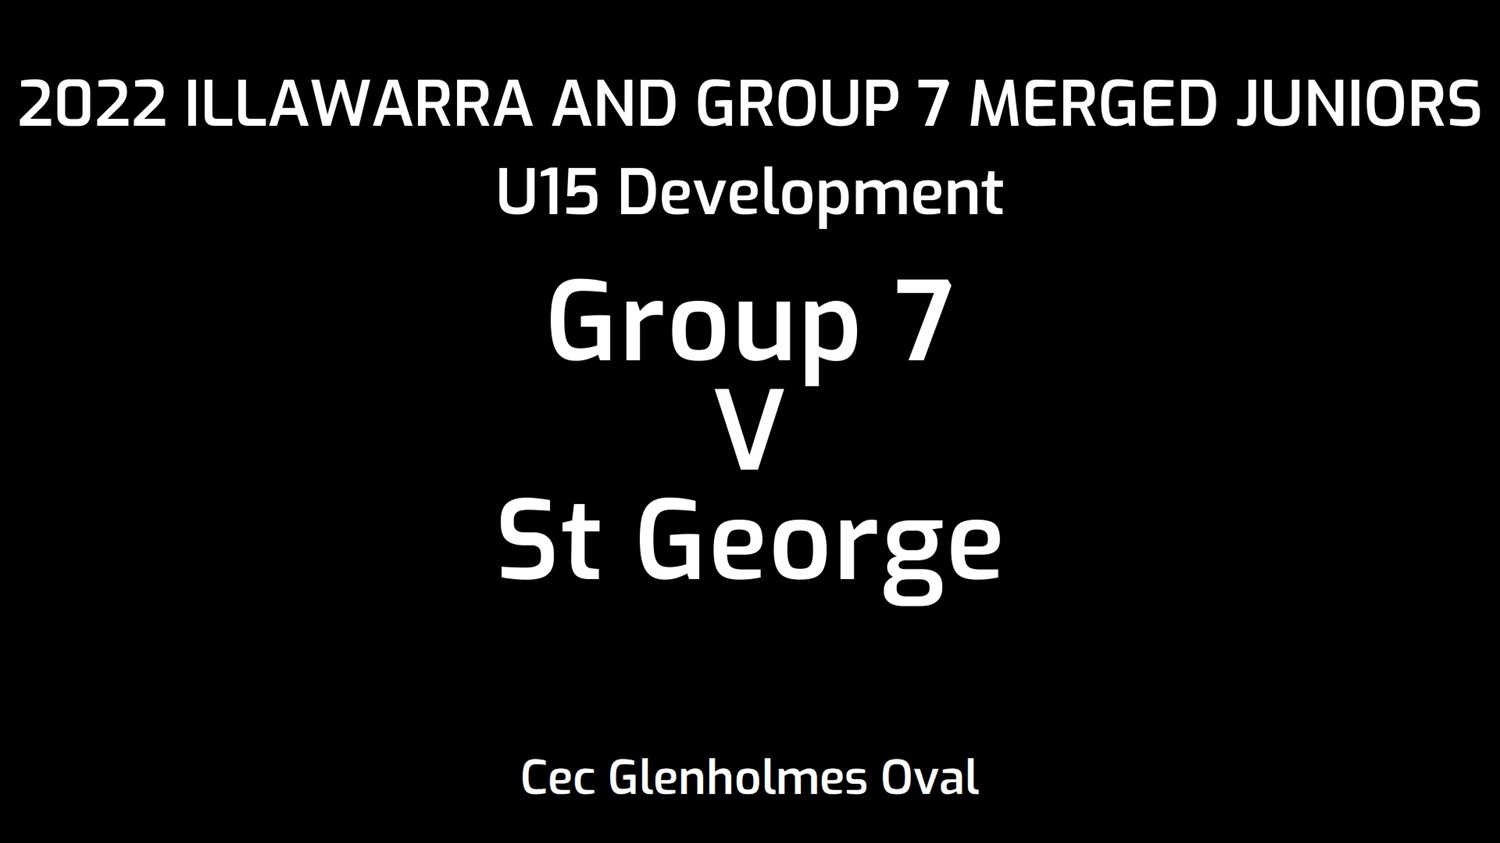 220924-Illawarra and Group 7 Merged Juniors U15 Development - Group 7 v St George Dragons Minigame Slate Image